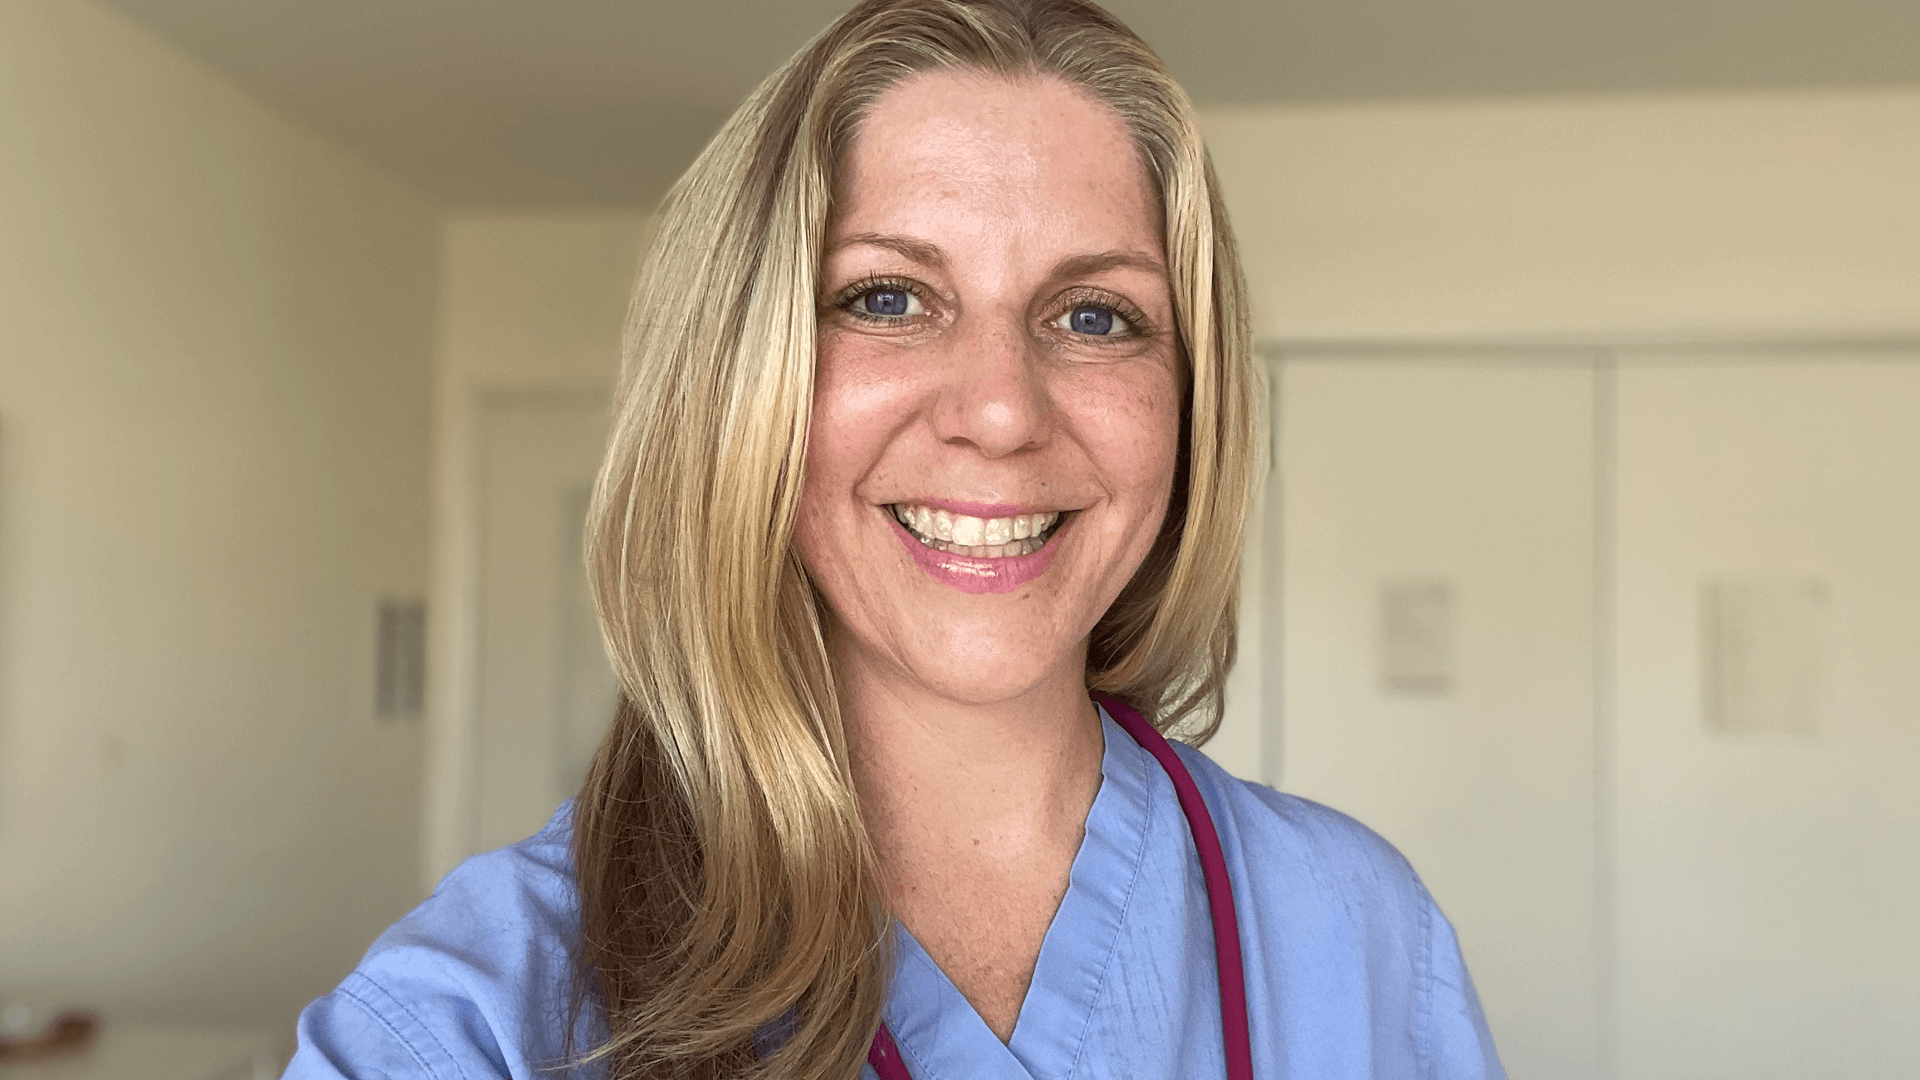 Hospice Nurse Takes to TikTok to Talk Openly About Death